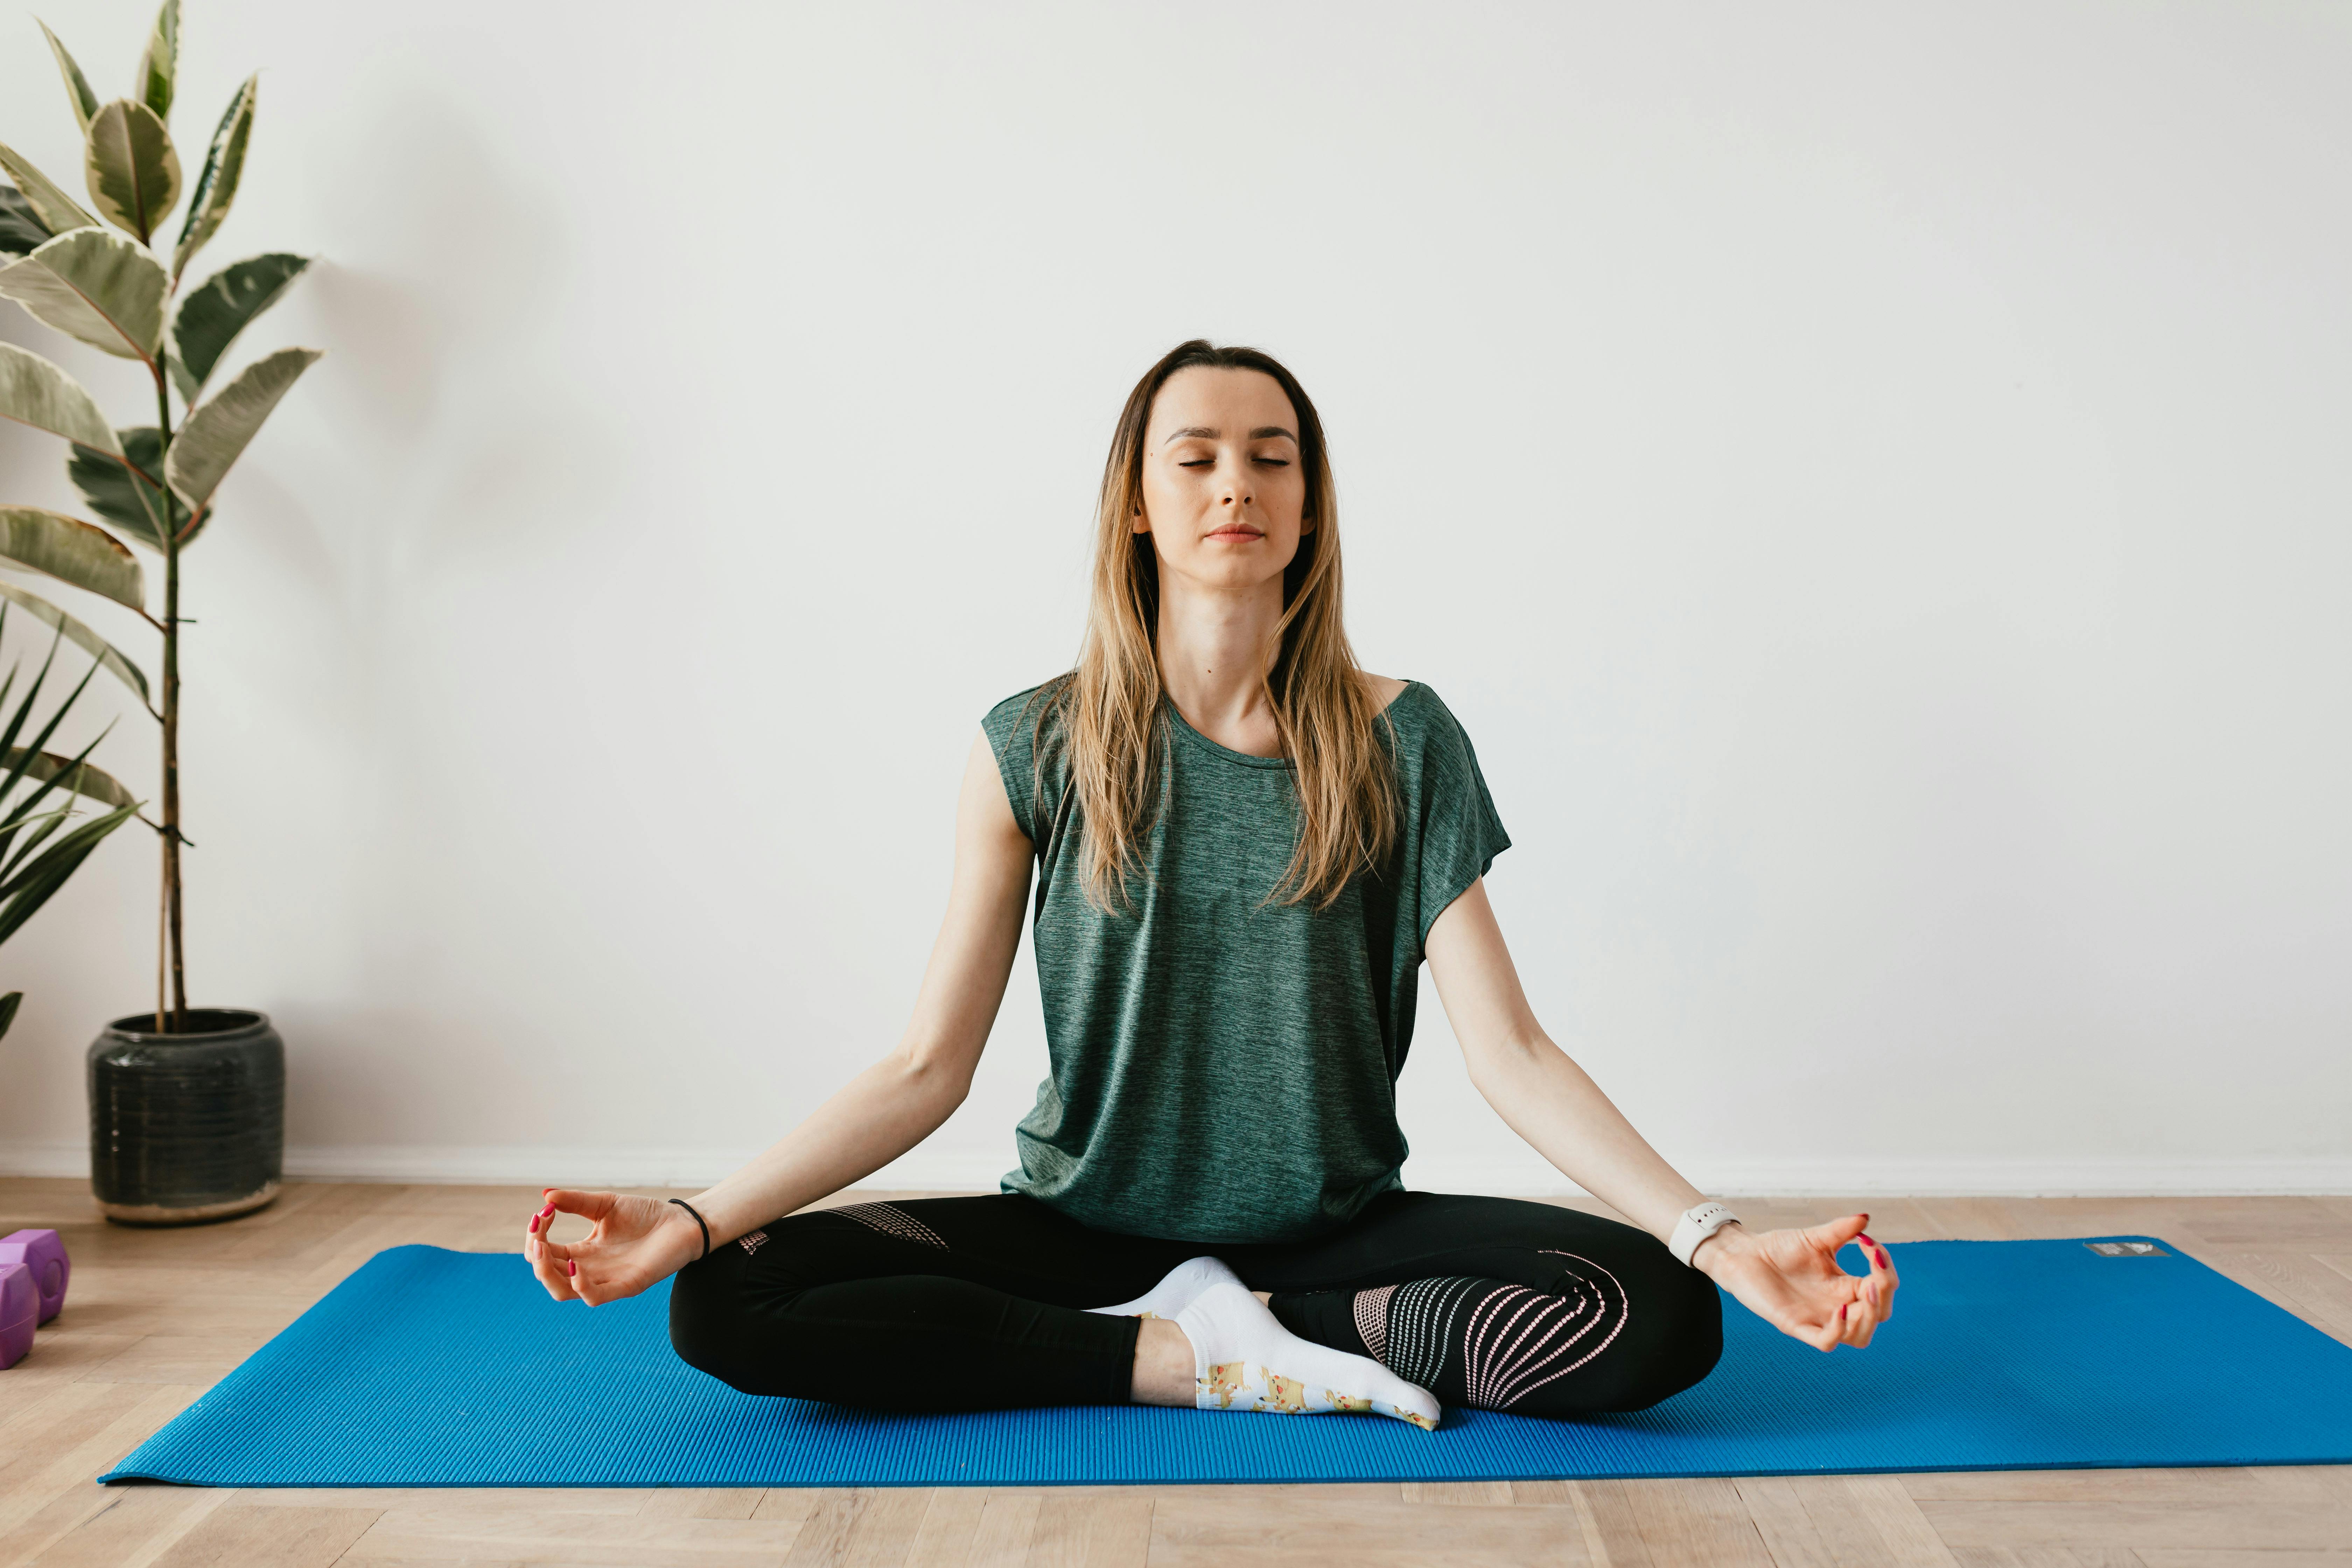 Baddha Padmasana (Lotus Posture) Benefits, Adjustment & Cautions